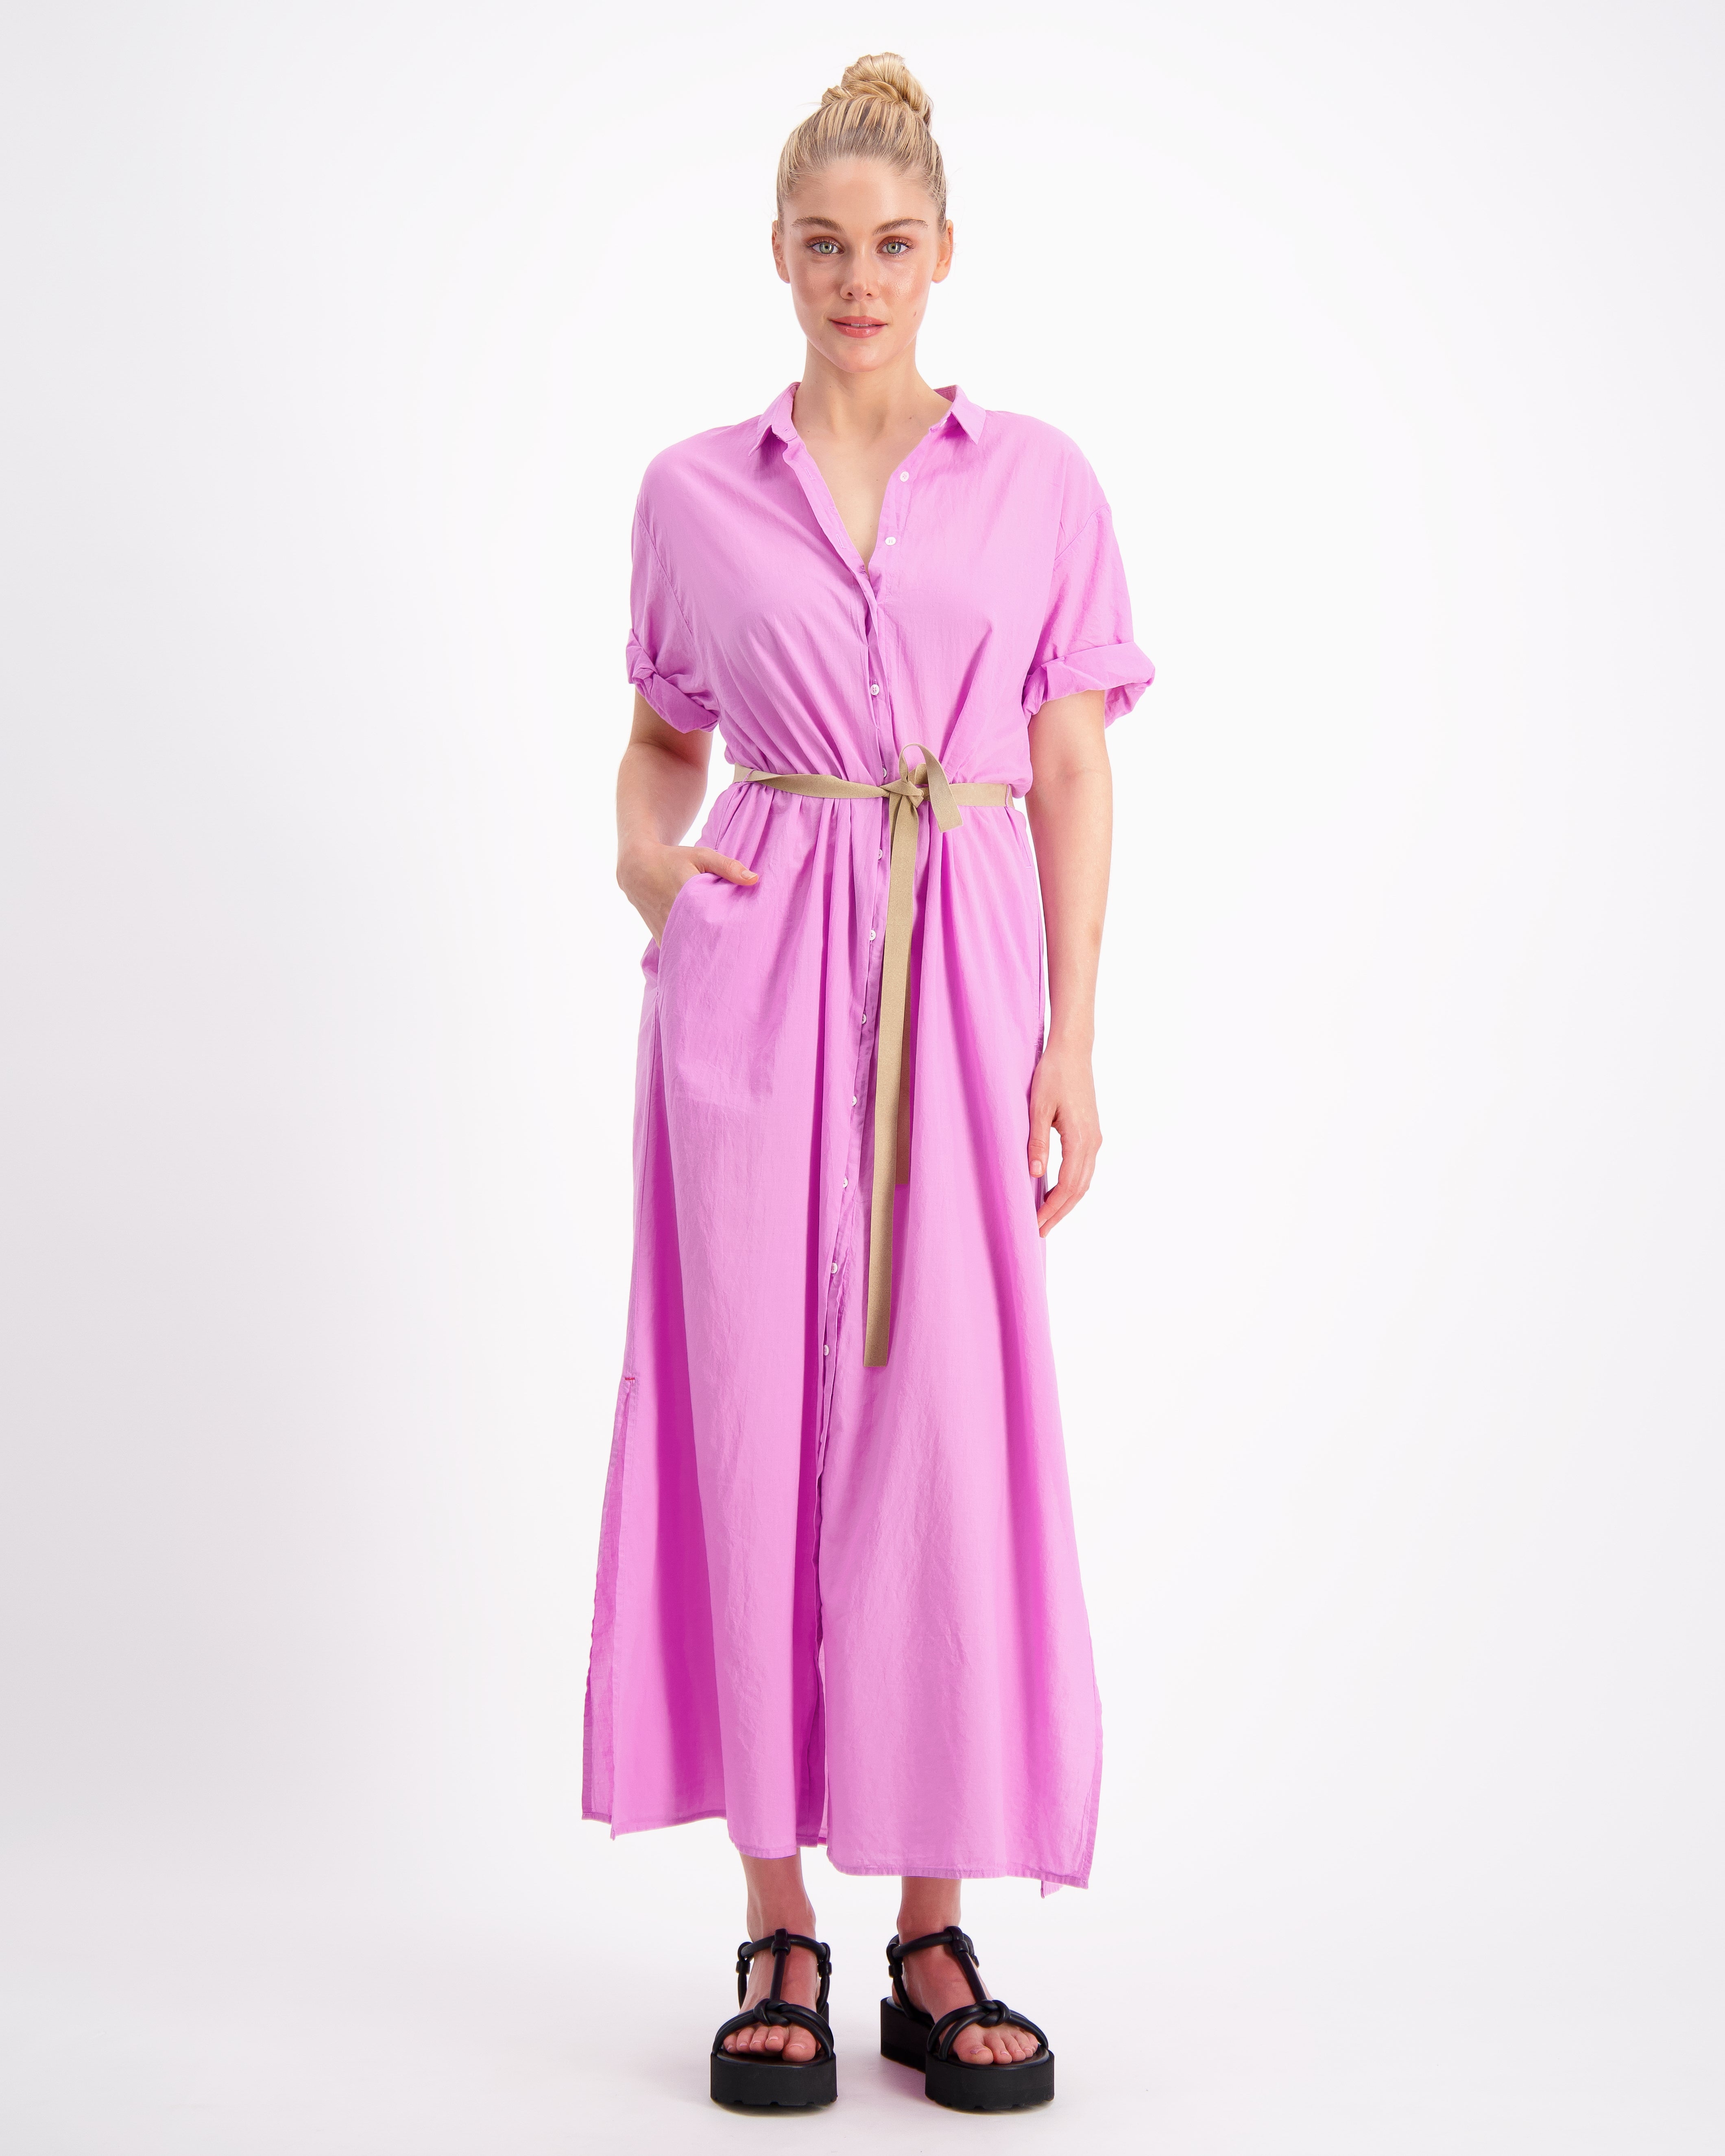 Linnet Dress in Lavender Pink